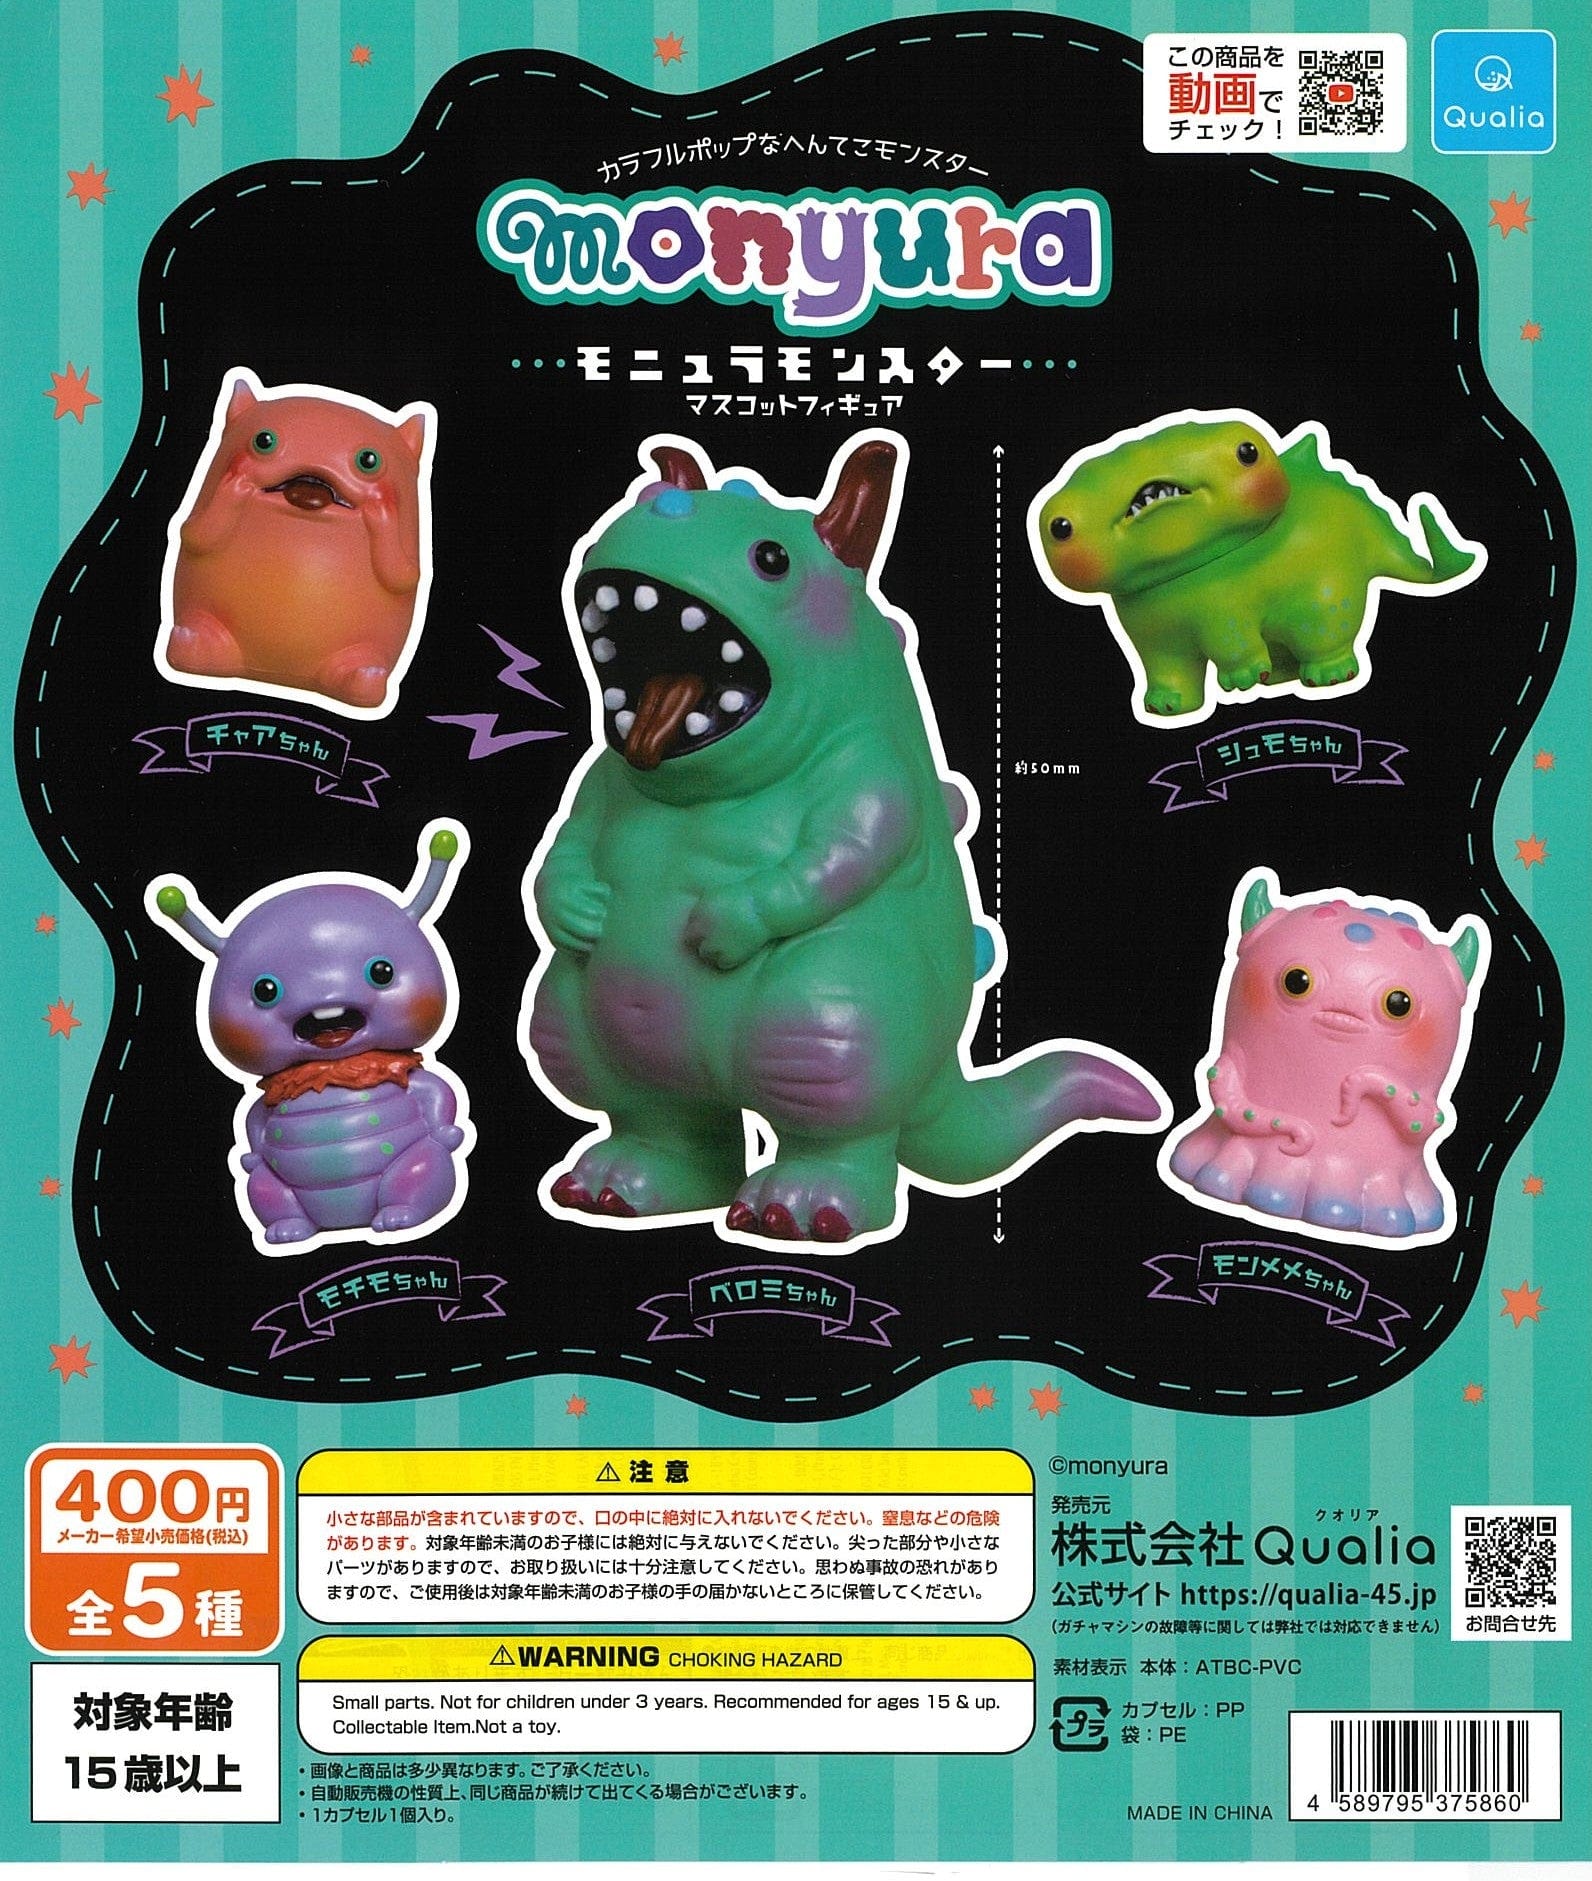 Qualia CP2302 Monyura Monster Mascot Figure